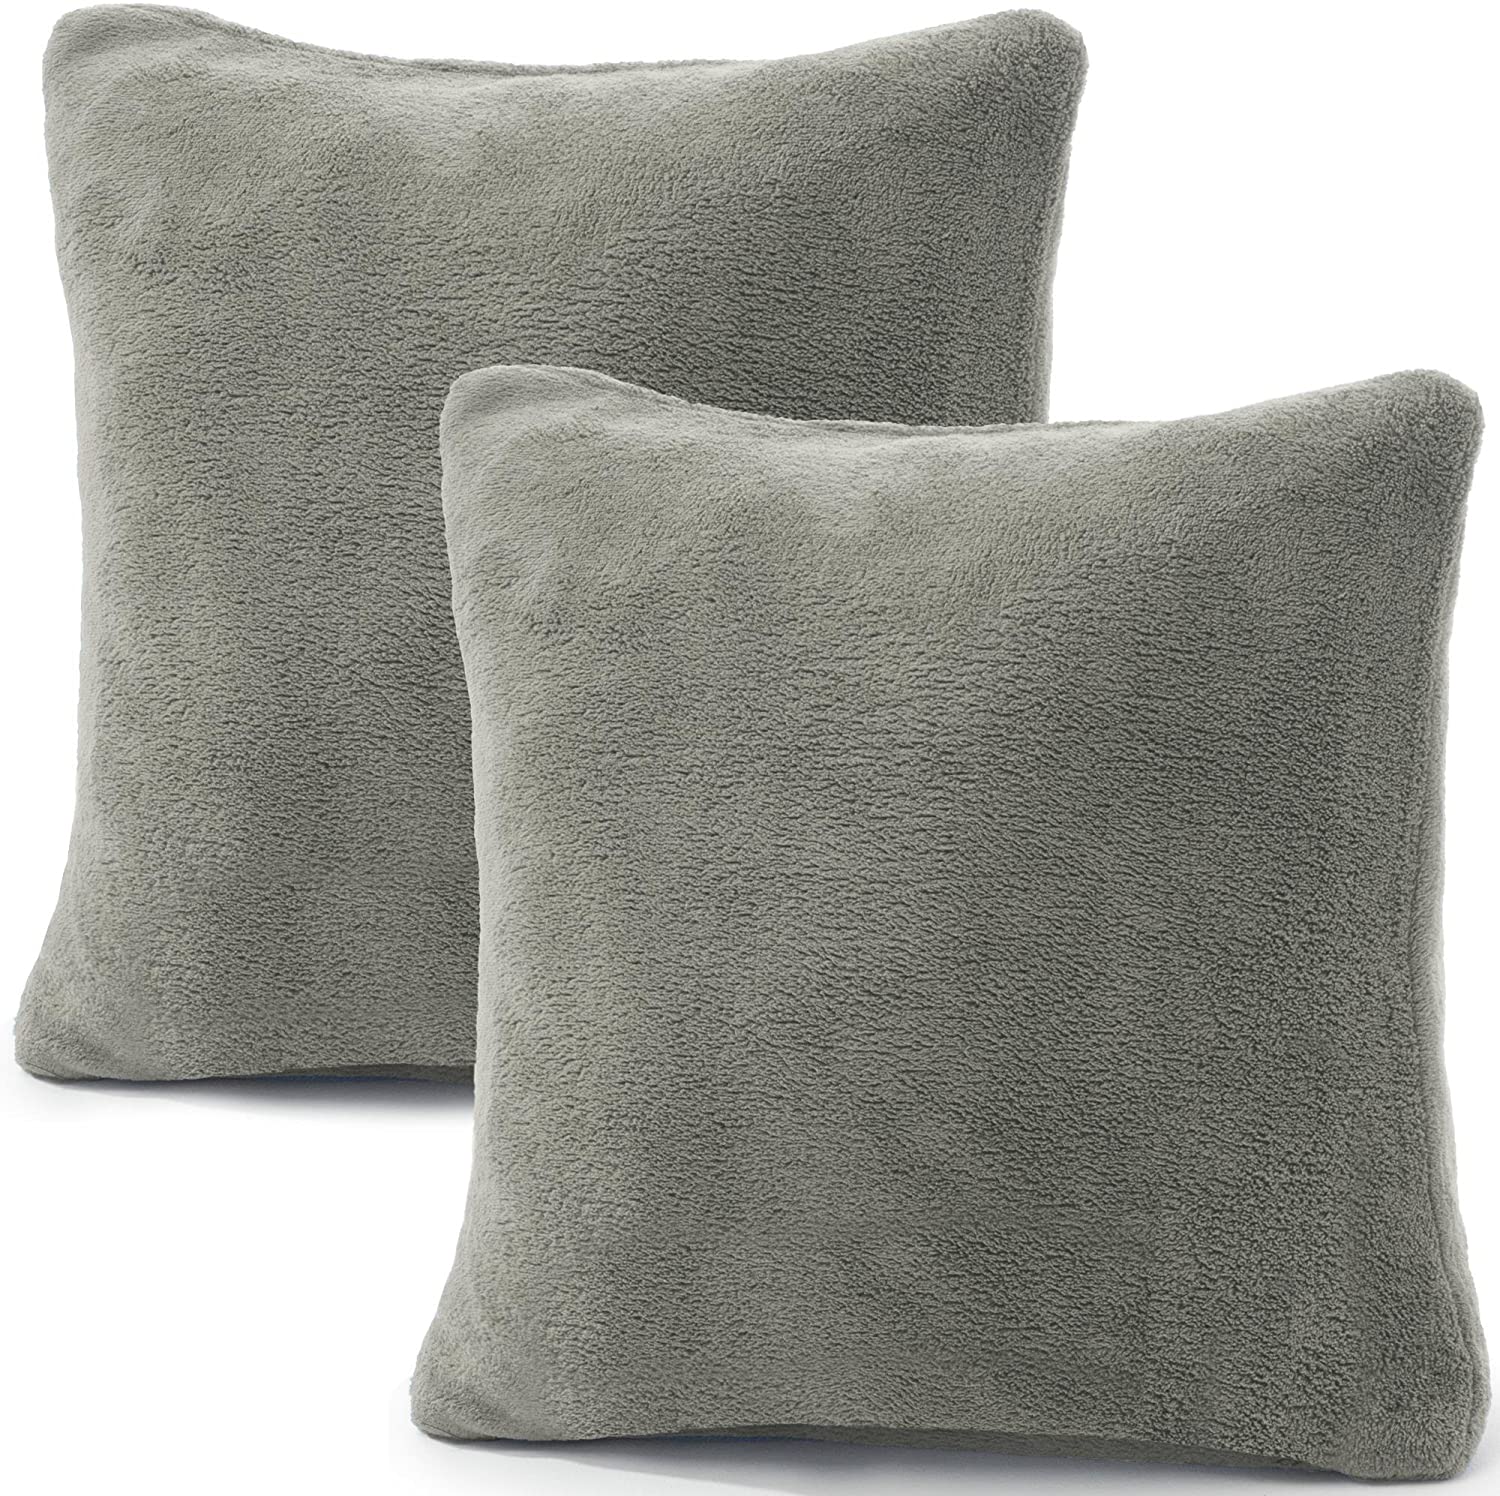 Microfibre Pillow Cases In Plain in Sizes 40x40 40x80 80x80 cm